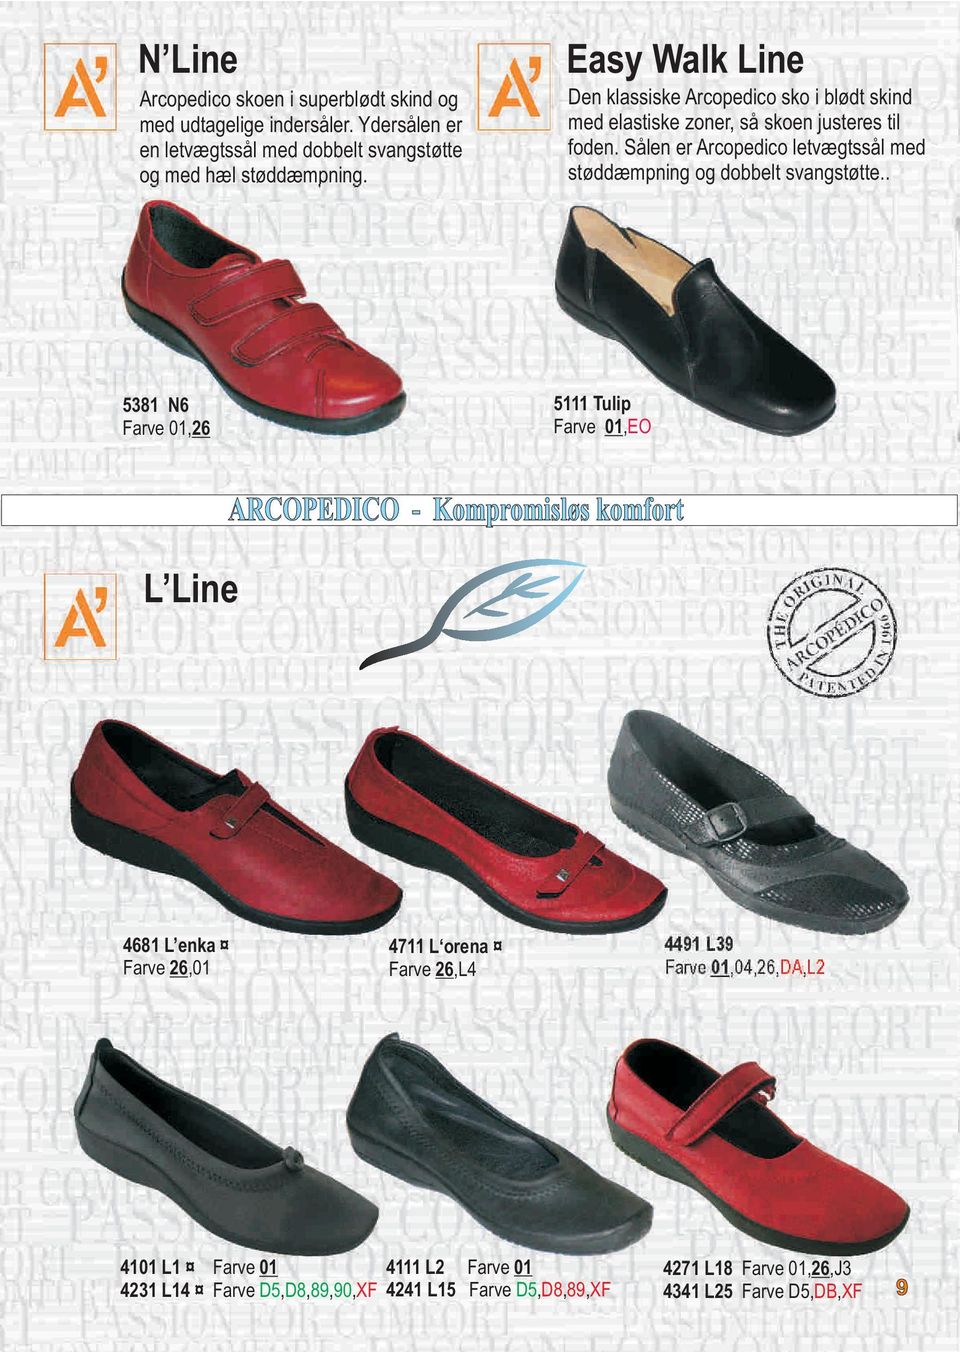 Easy Walk Line Den klassiske Arcopedico sko i blødt skind med elastiske zoner, så skoen justeres til foden.